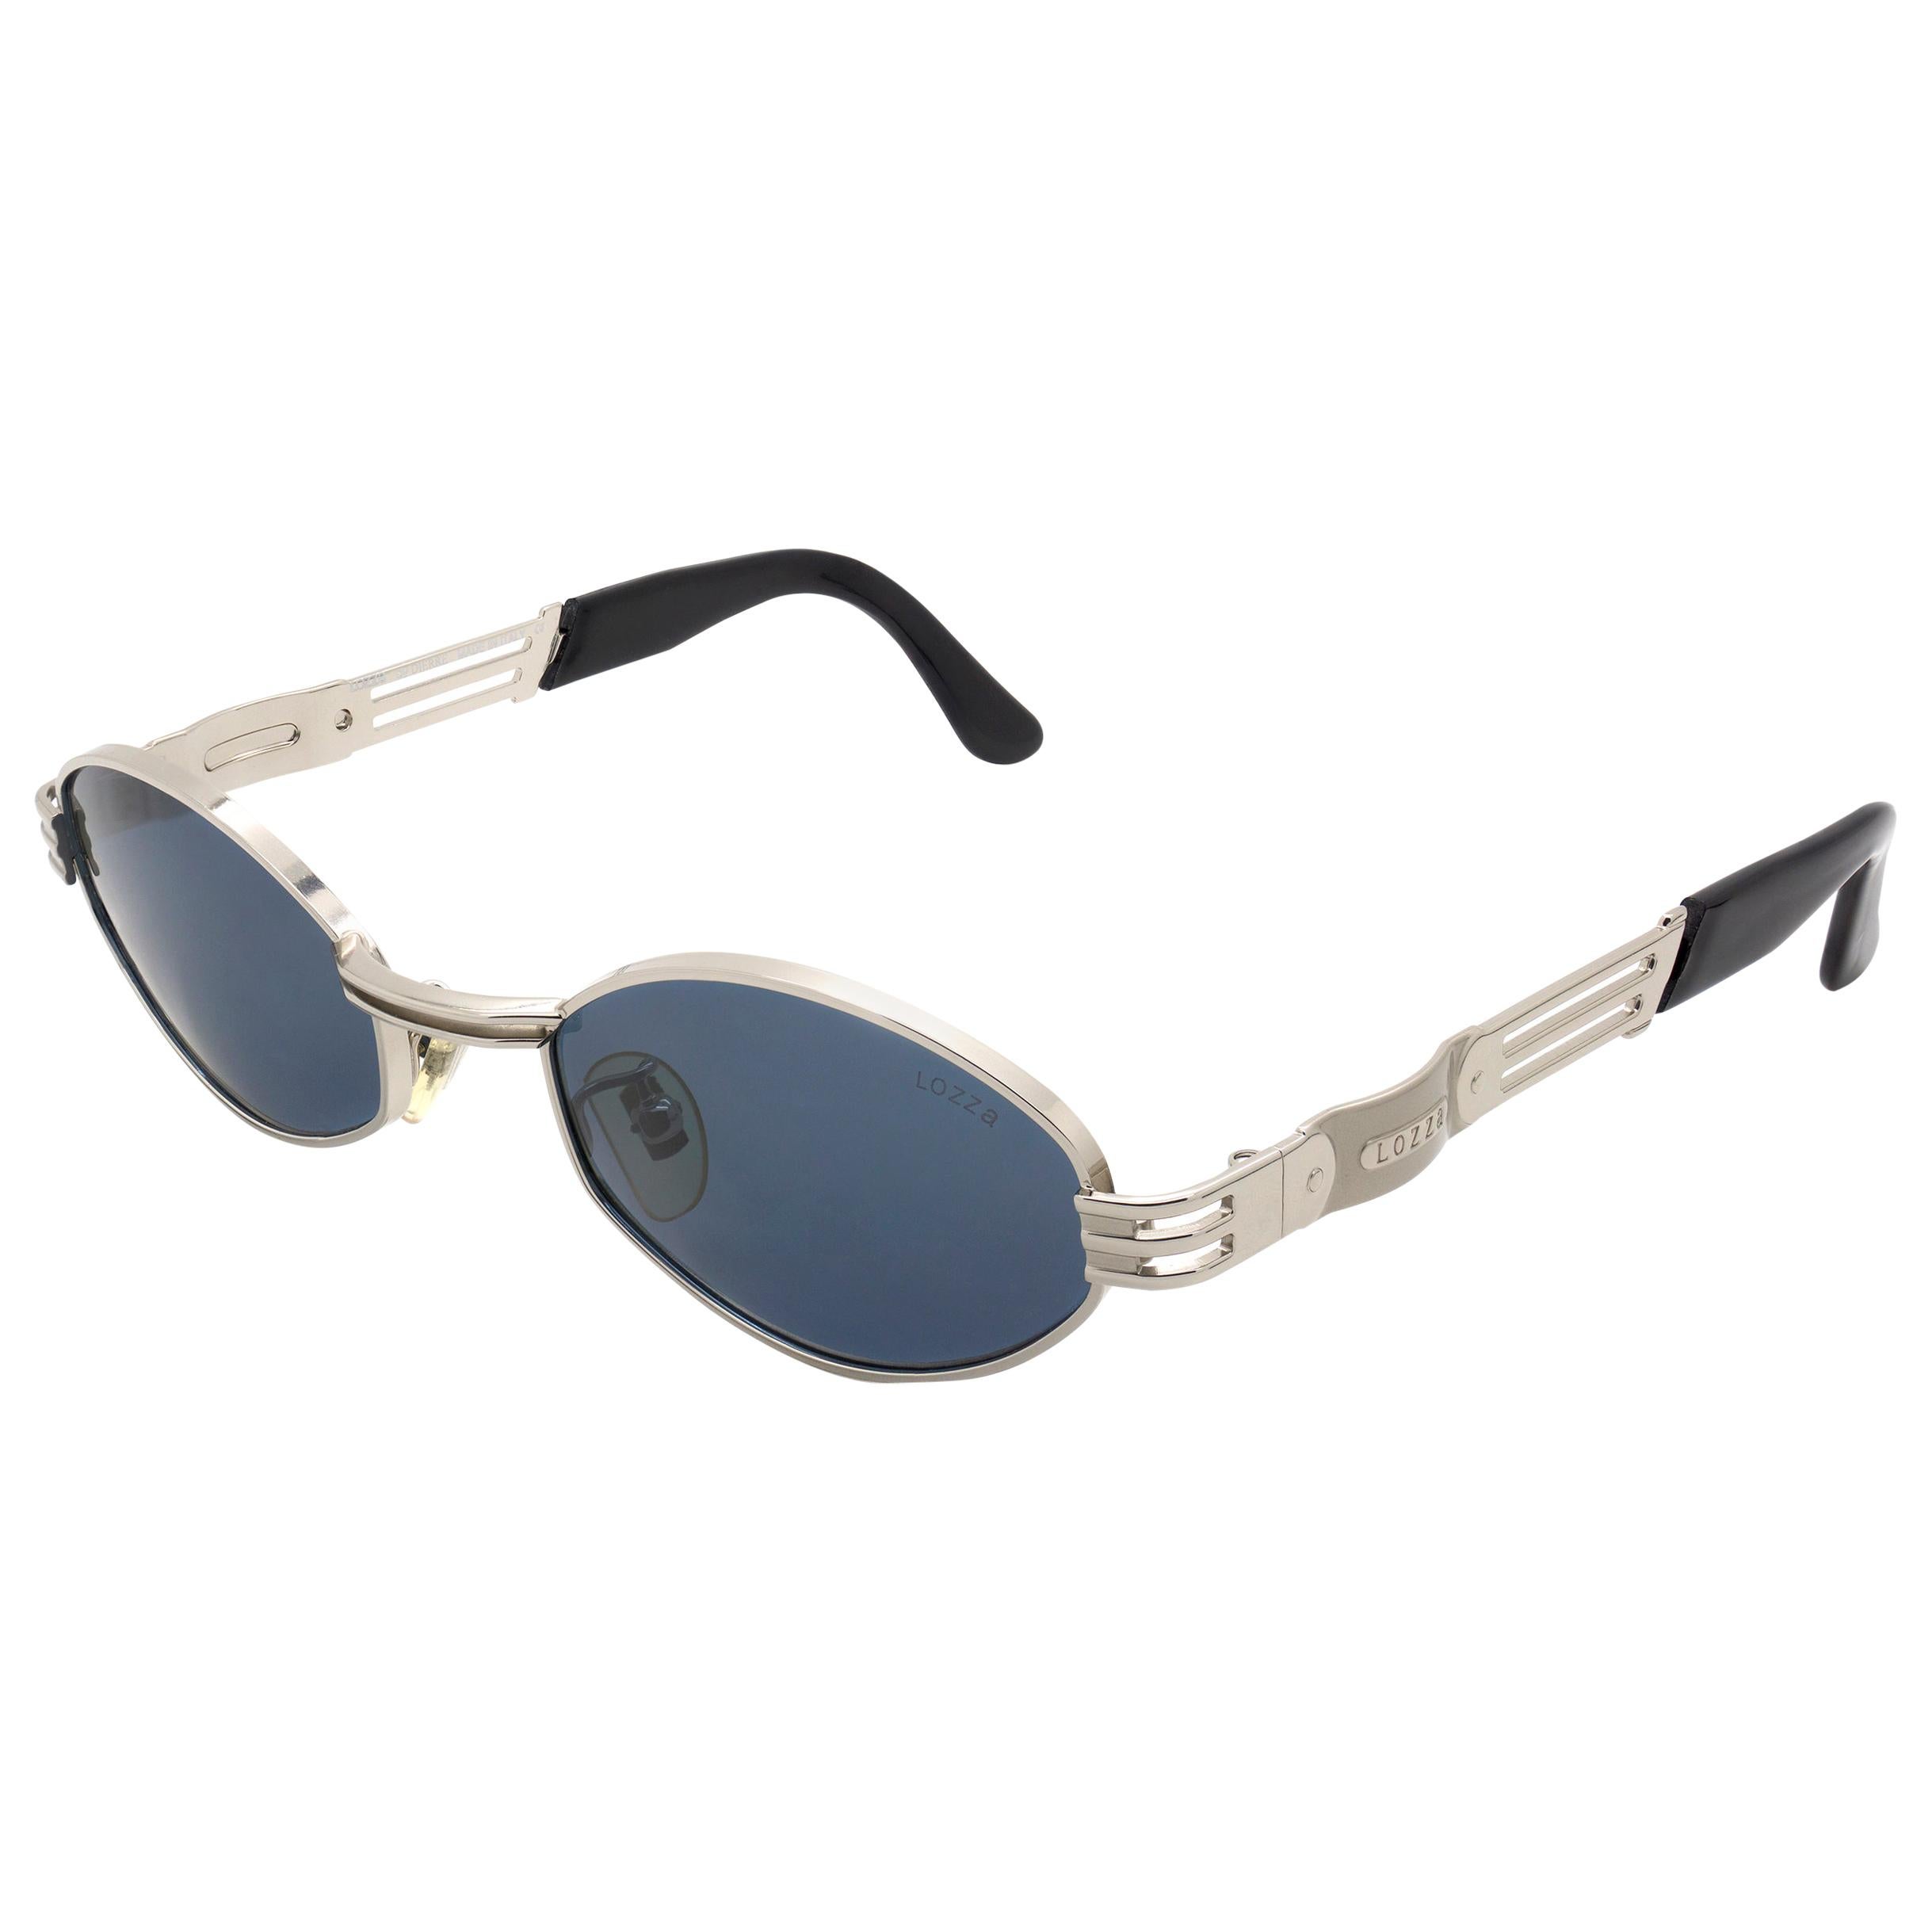 Vintage sunglasses by Lozza, 80s hexagonal sunglasses For Sale